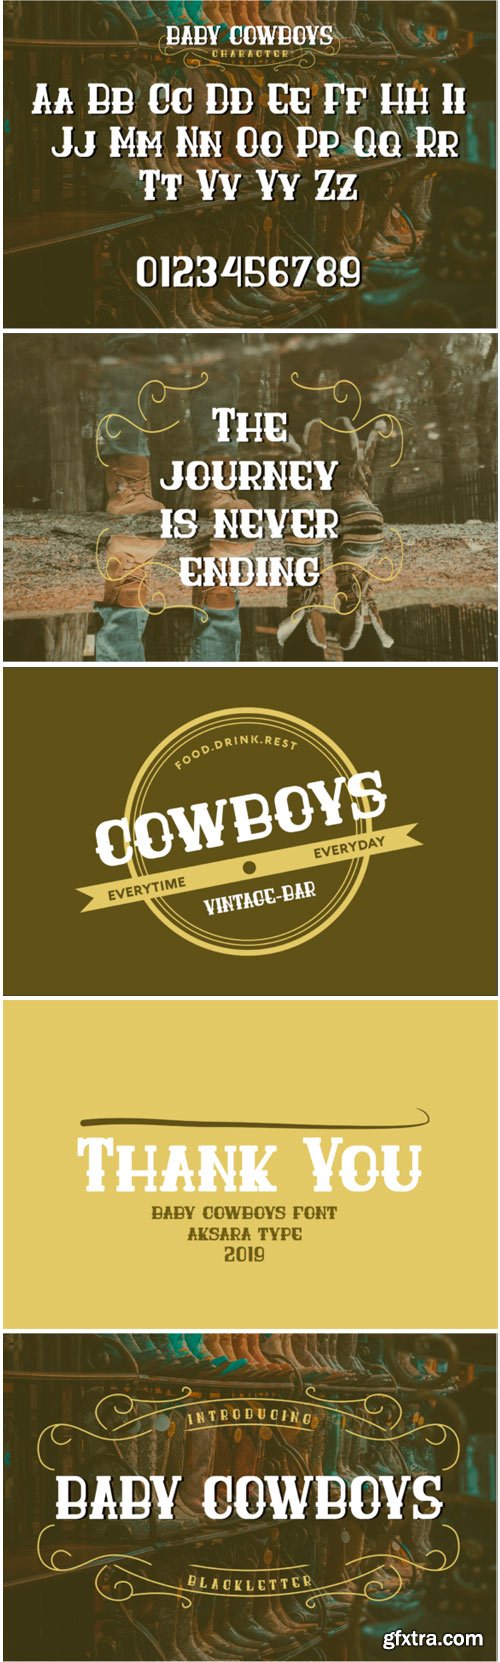 Baby Cowboys Font